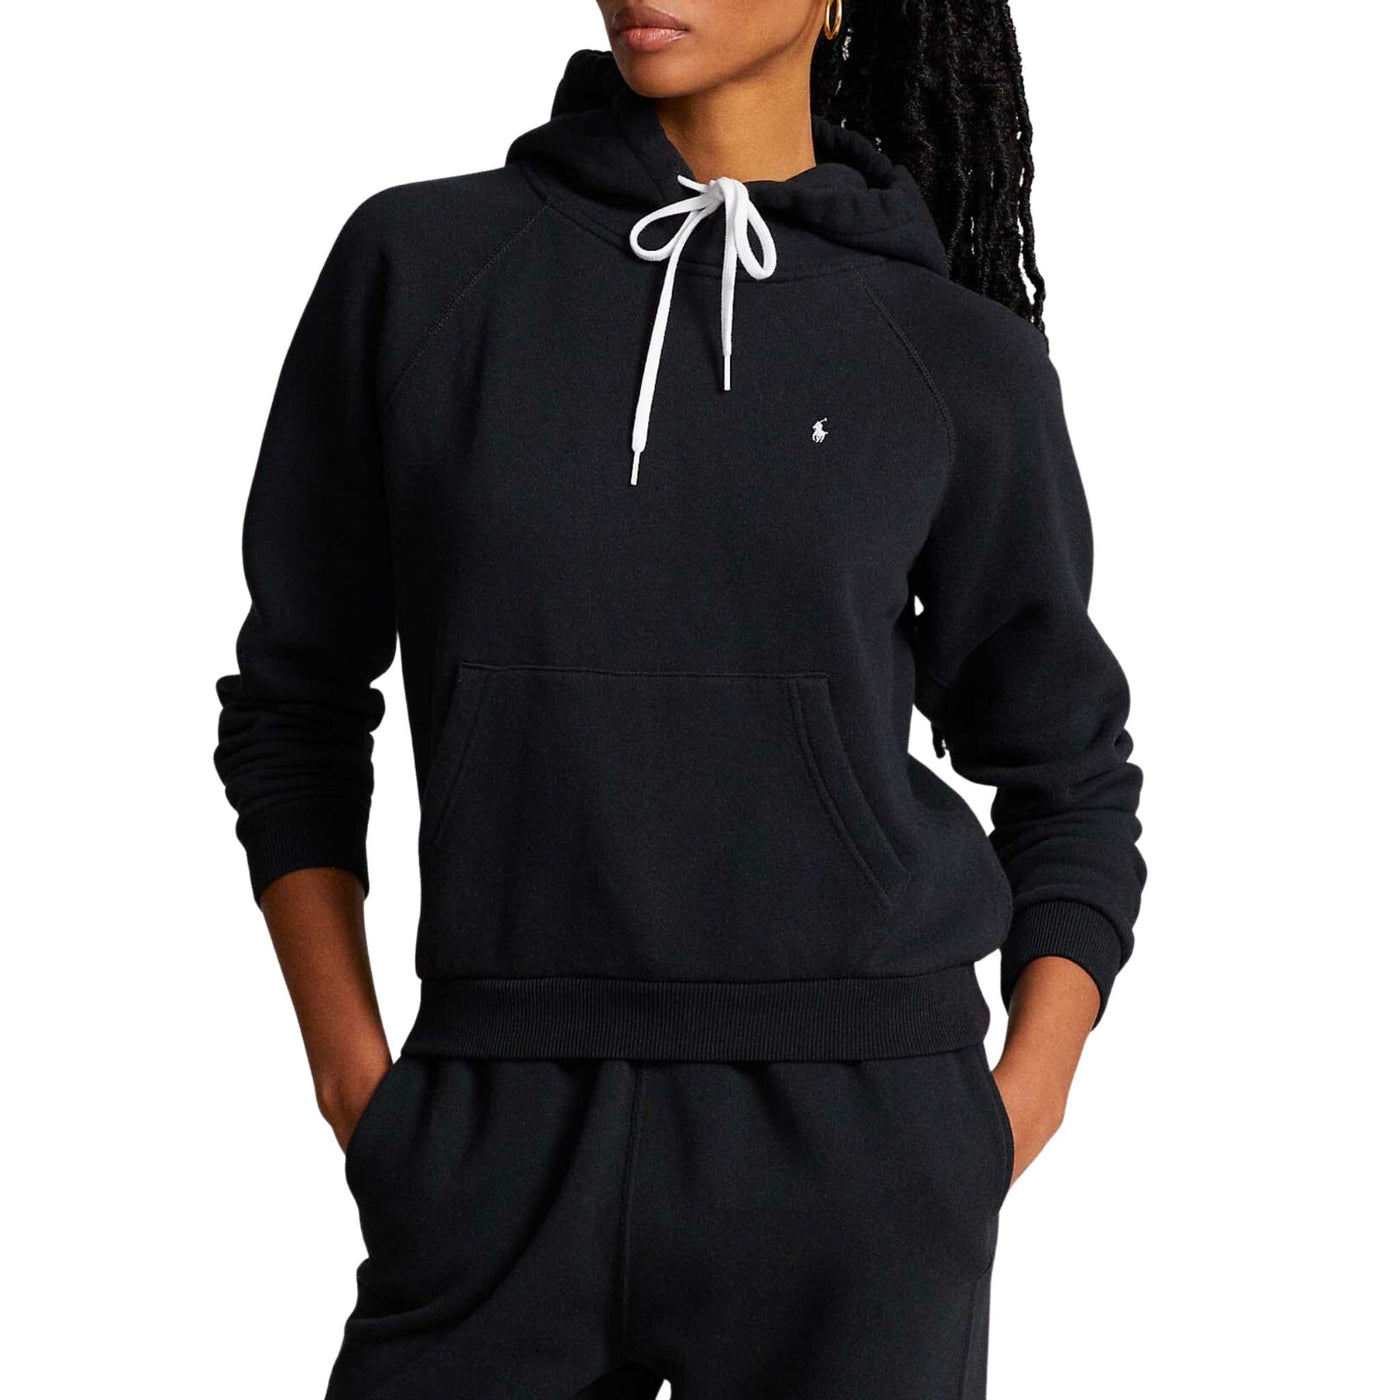 Women's Black Hooded Sweatshirt 